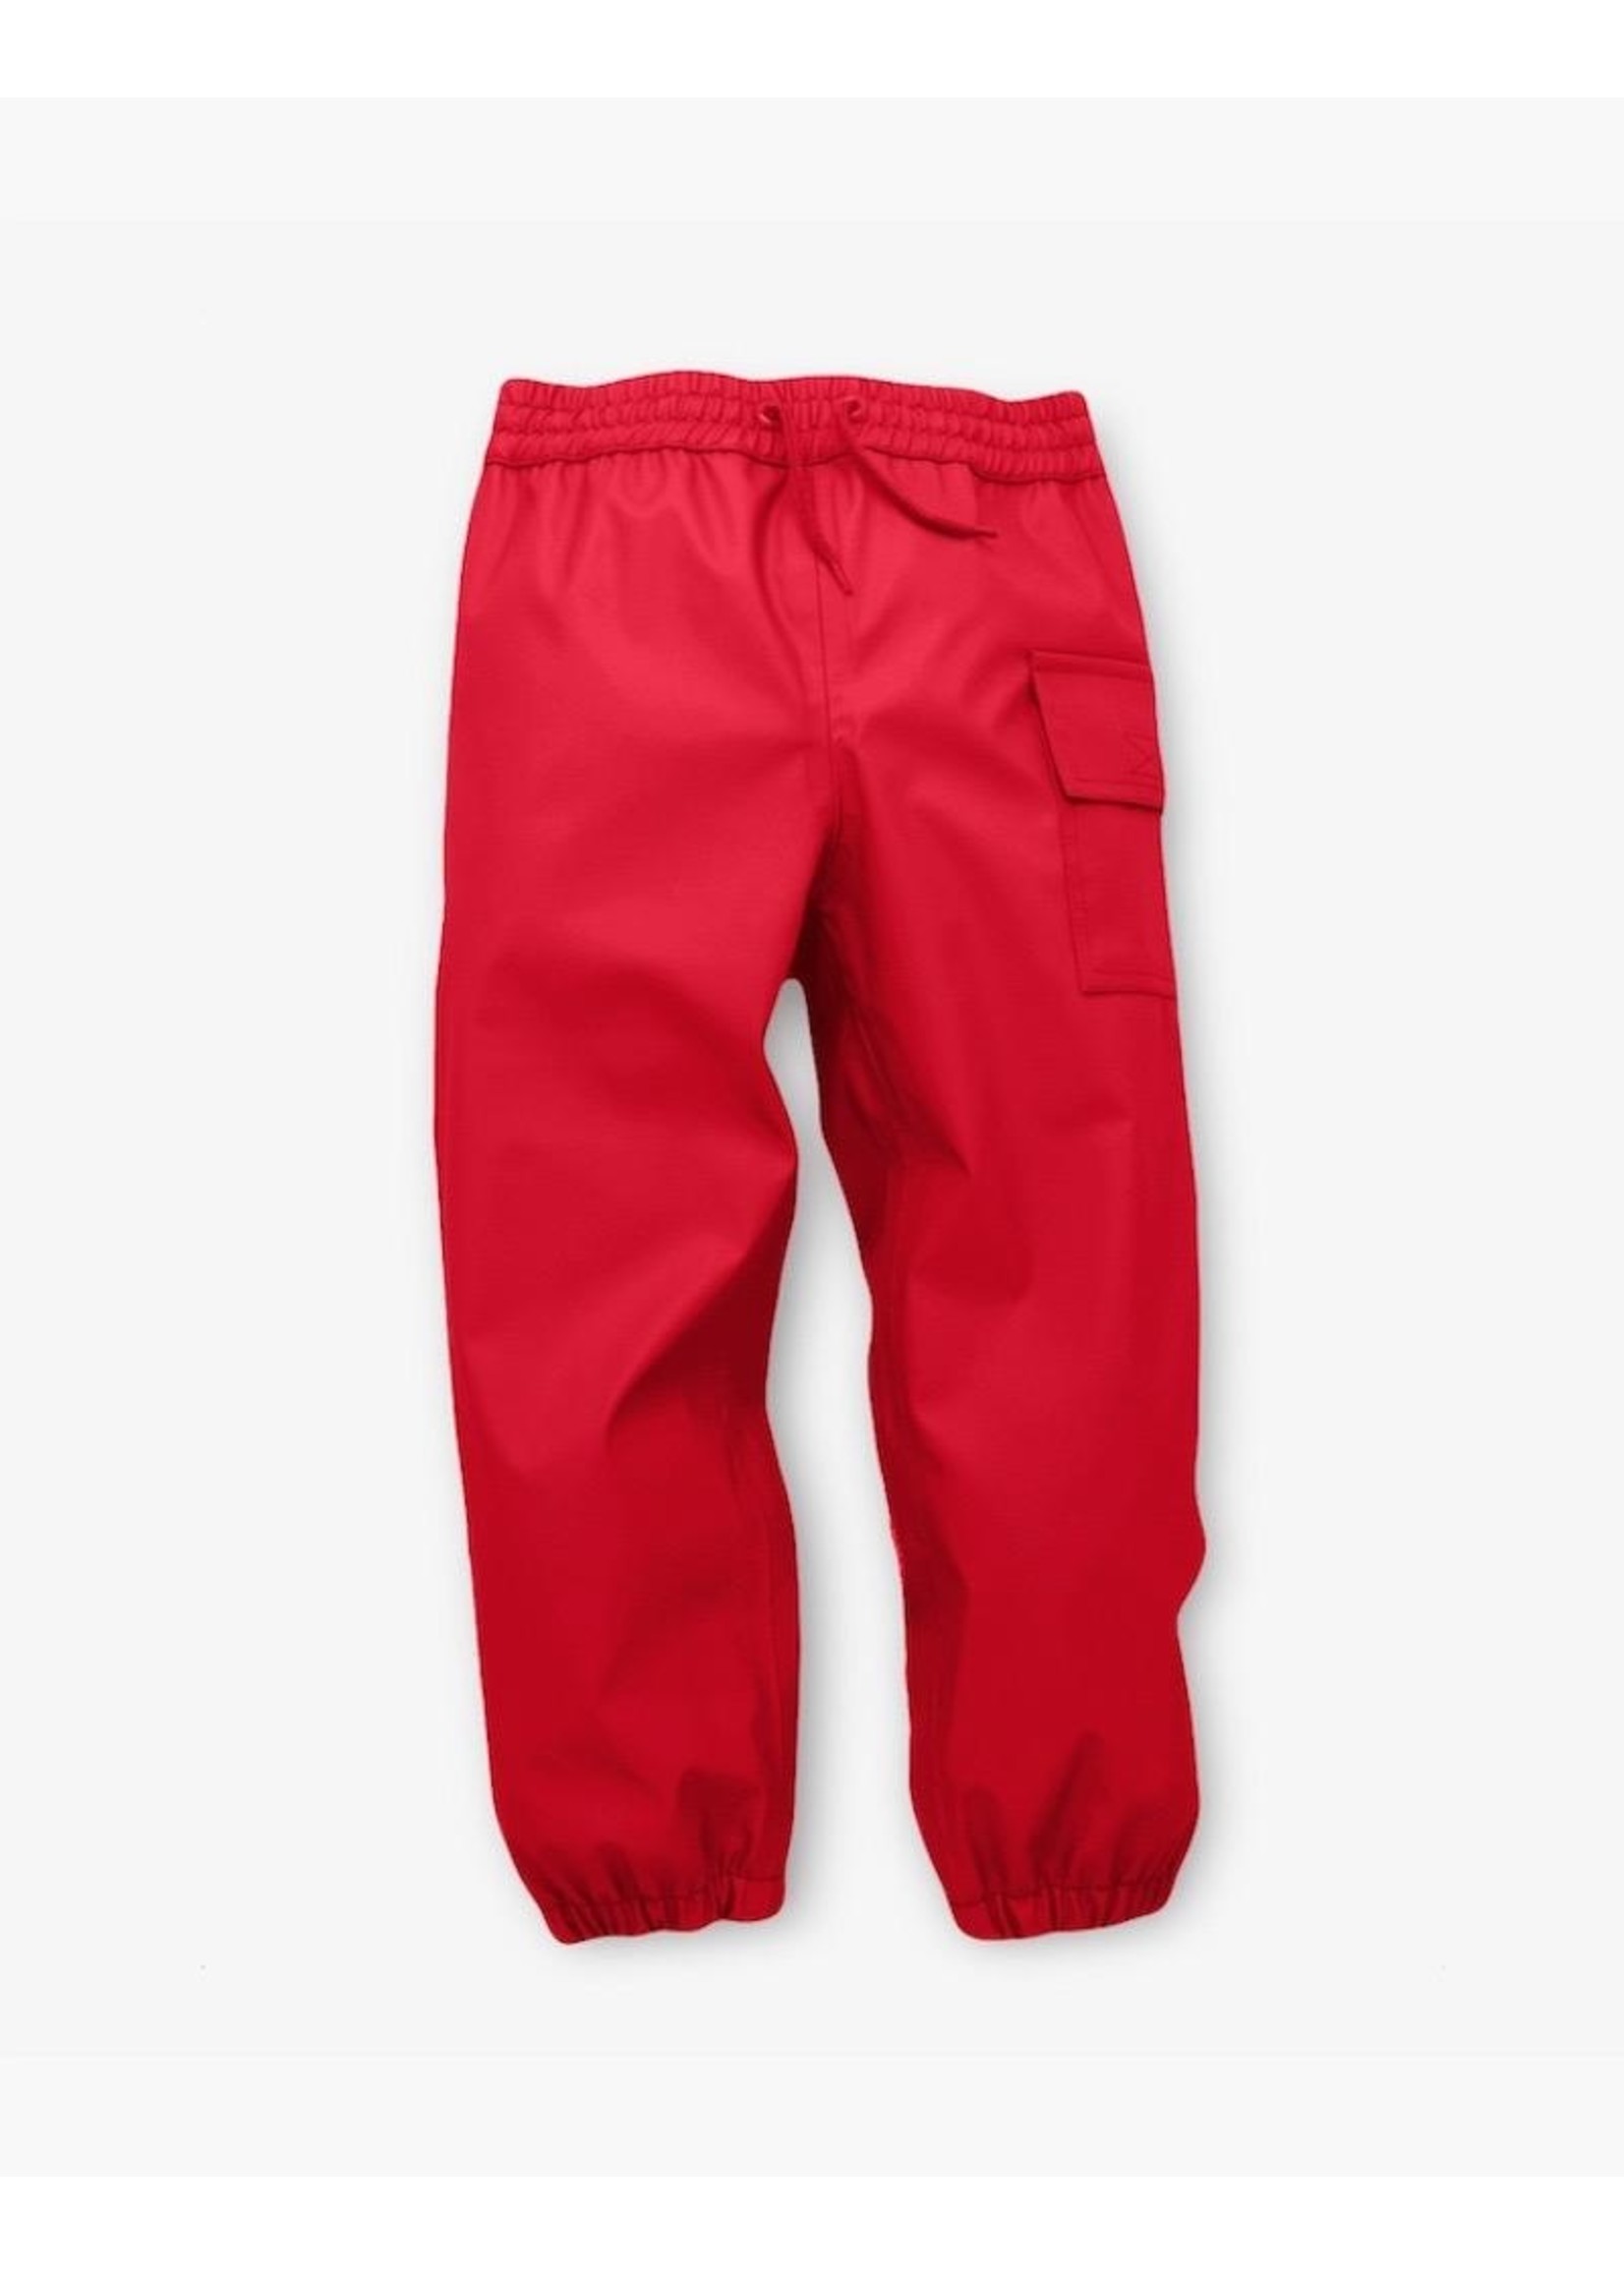 Hatley Hatley, Classic Red Splash Pants